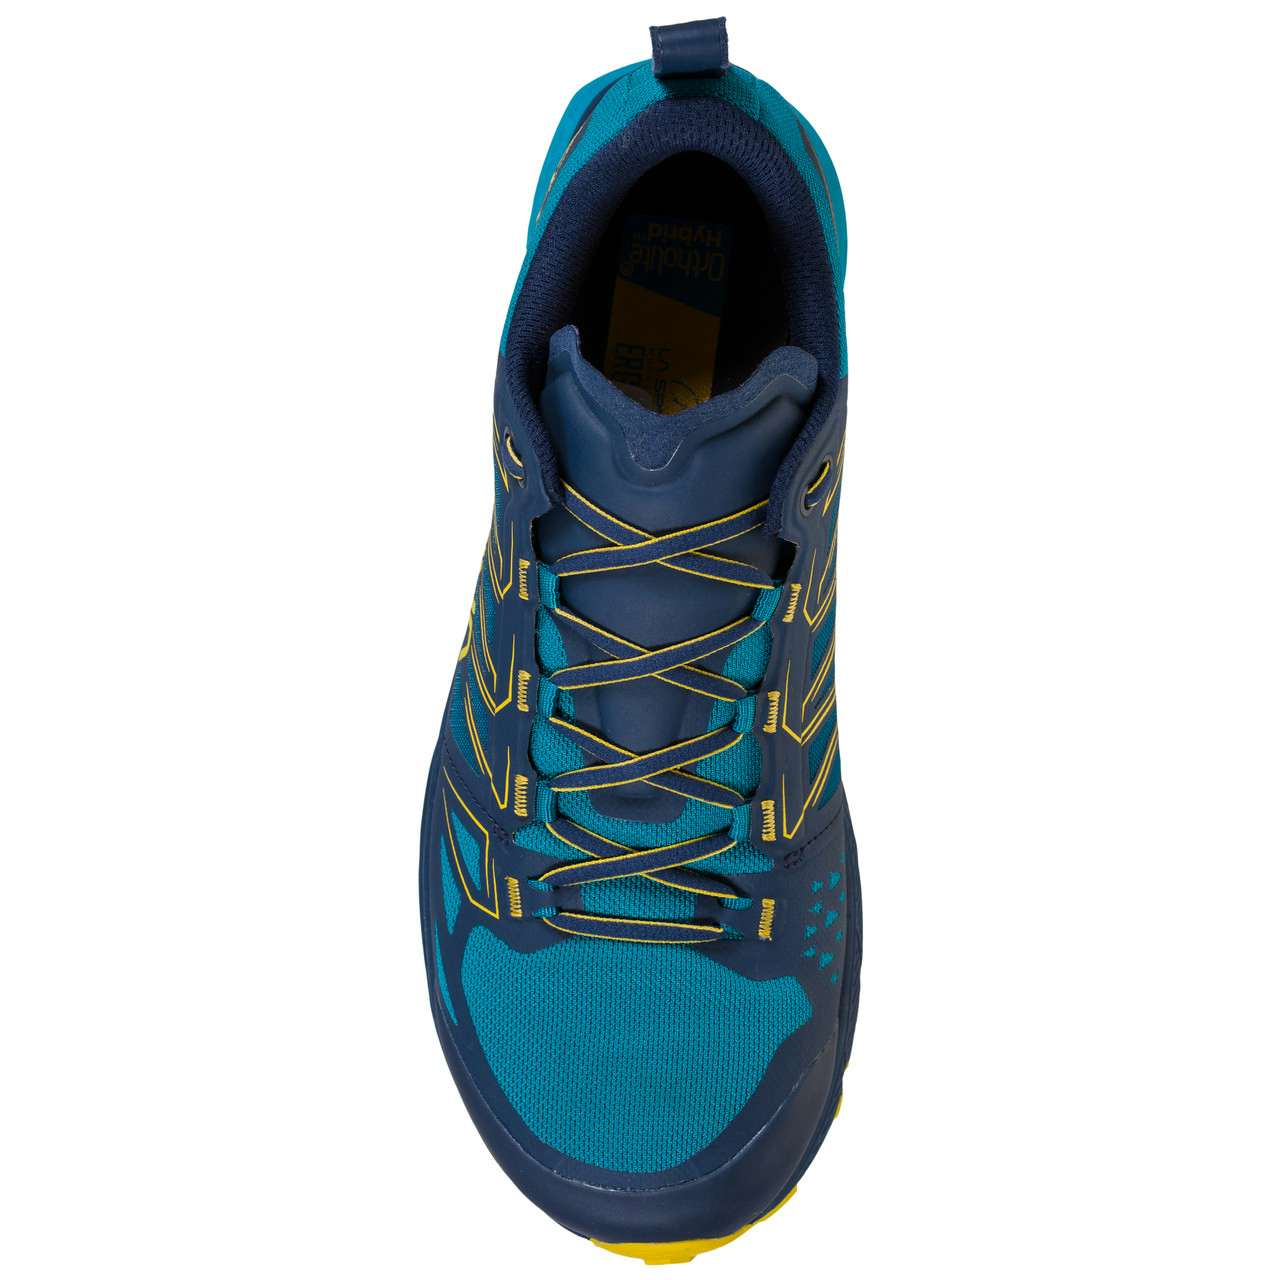 Jackal Gore-Tex Trail Running Shoes Night Blue/Moss